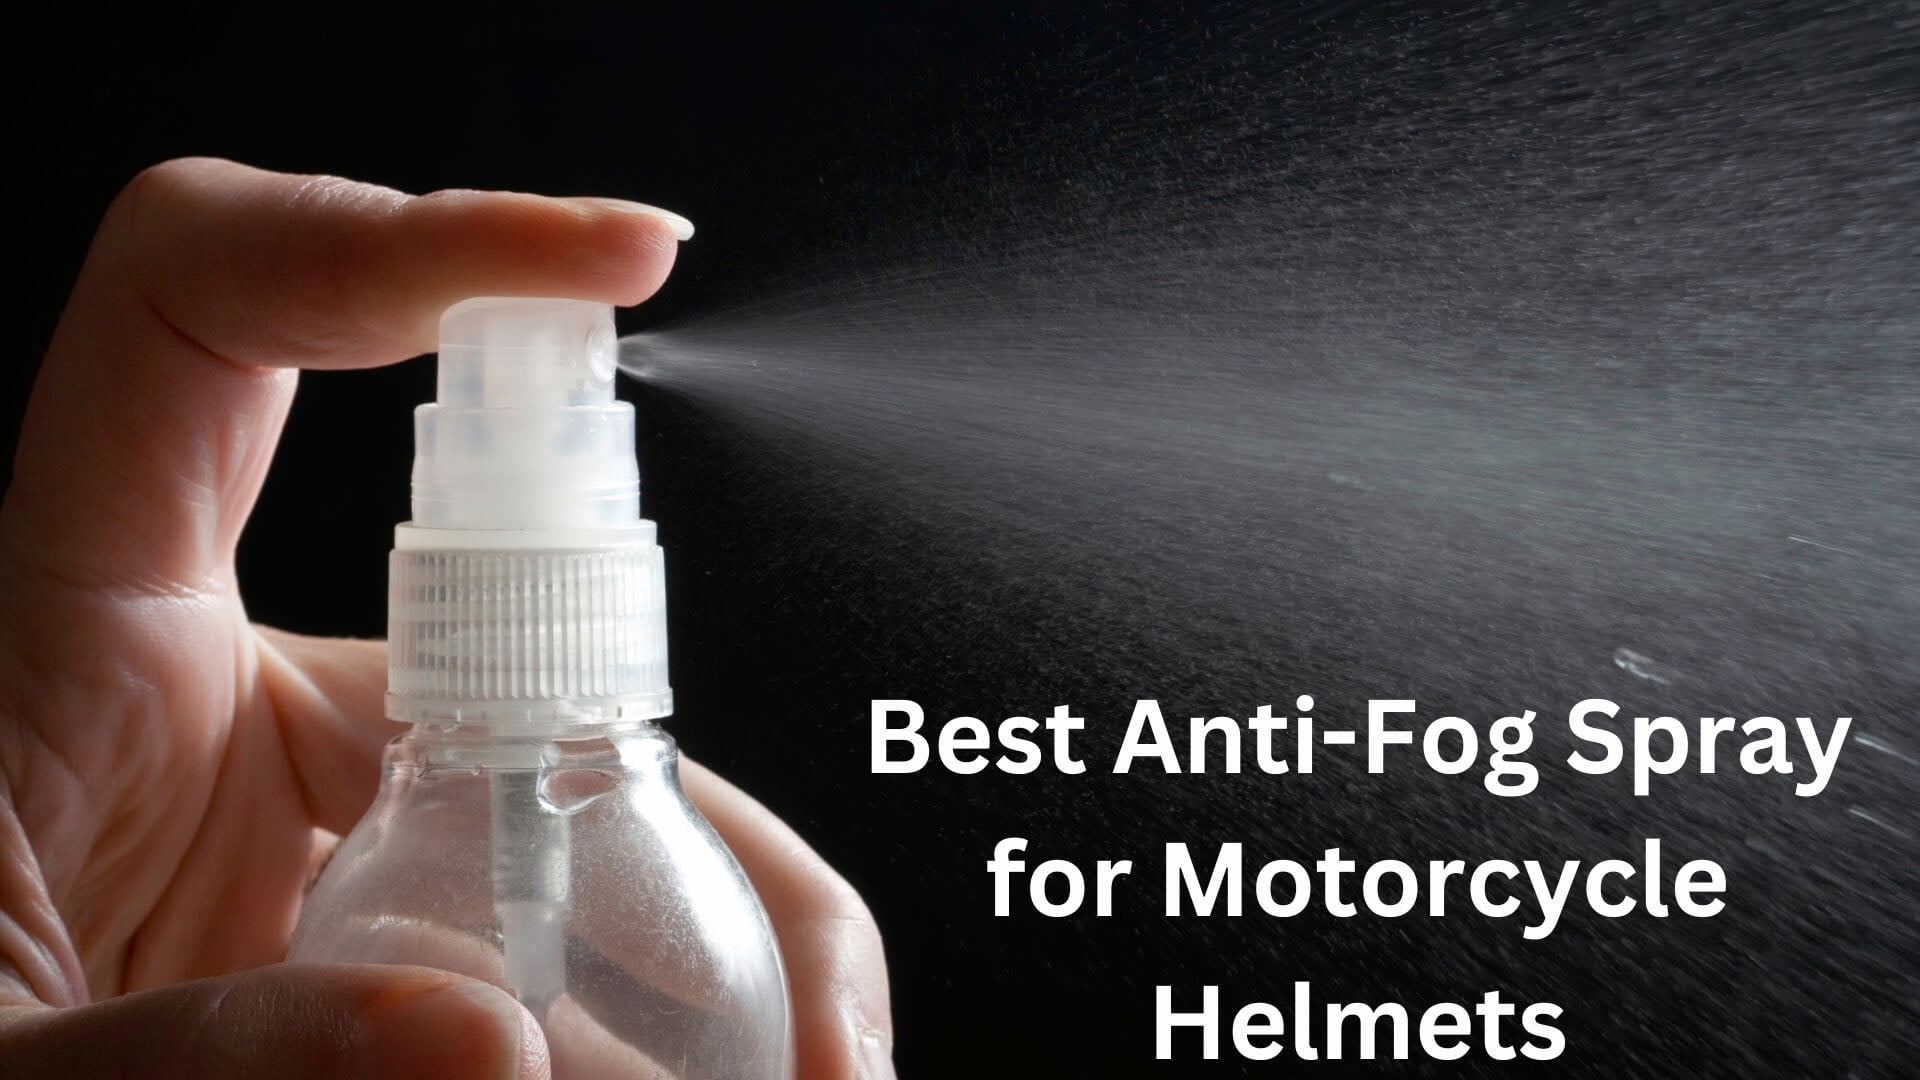 8 Best Anti-Fog Spray for Motorcycle Helmets.